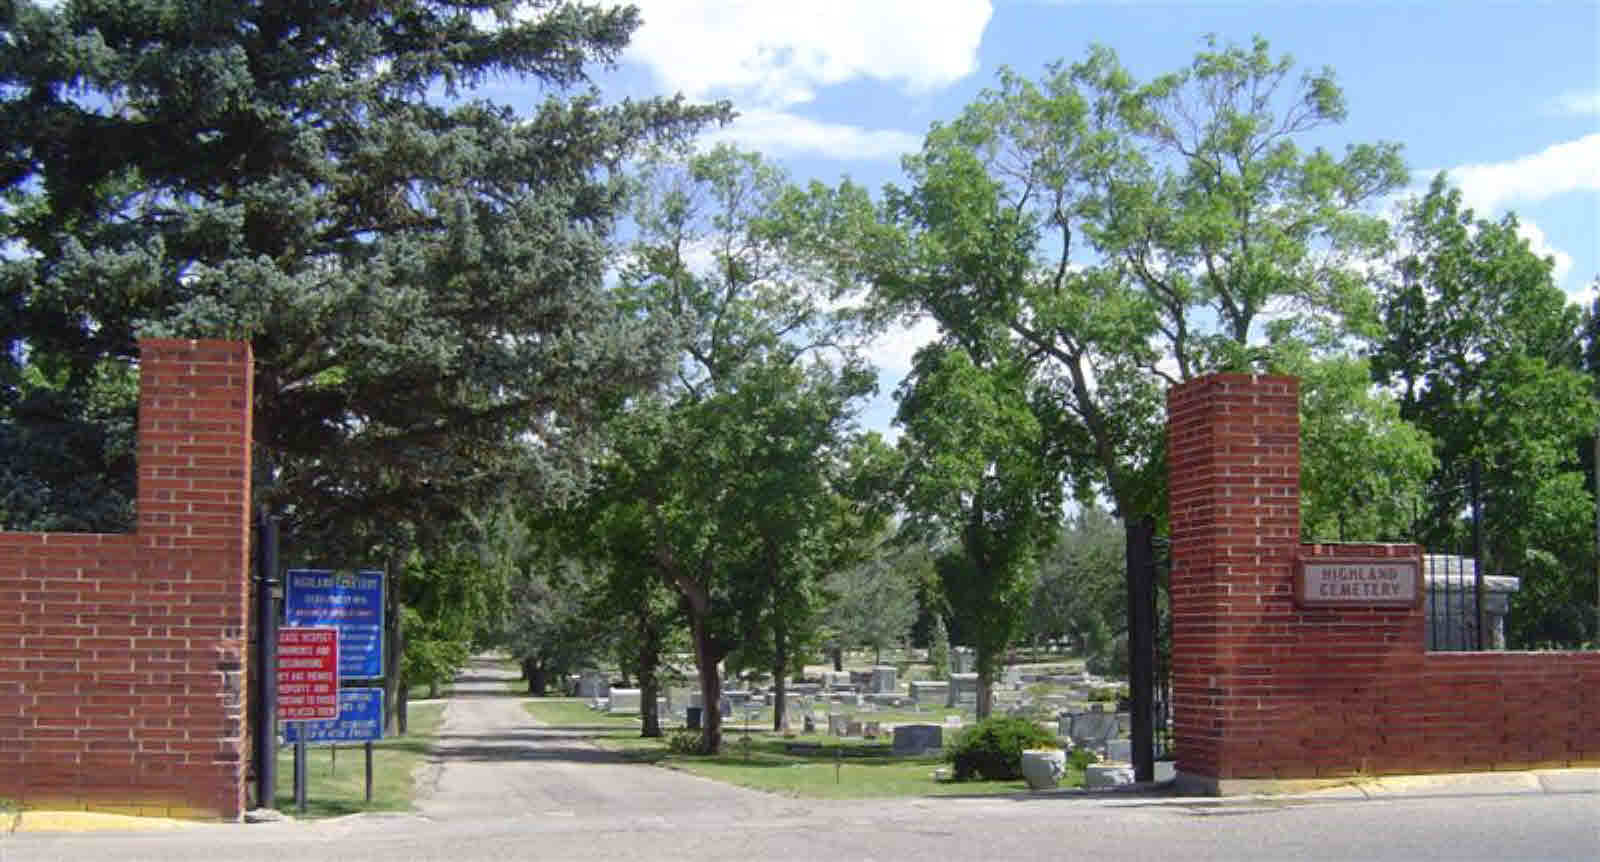 Highland AKA Casper Cemetery